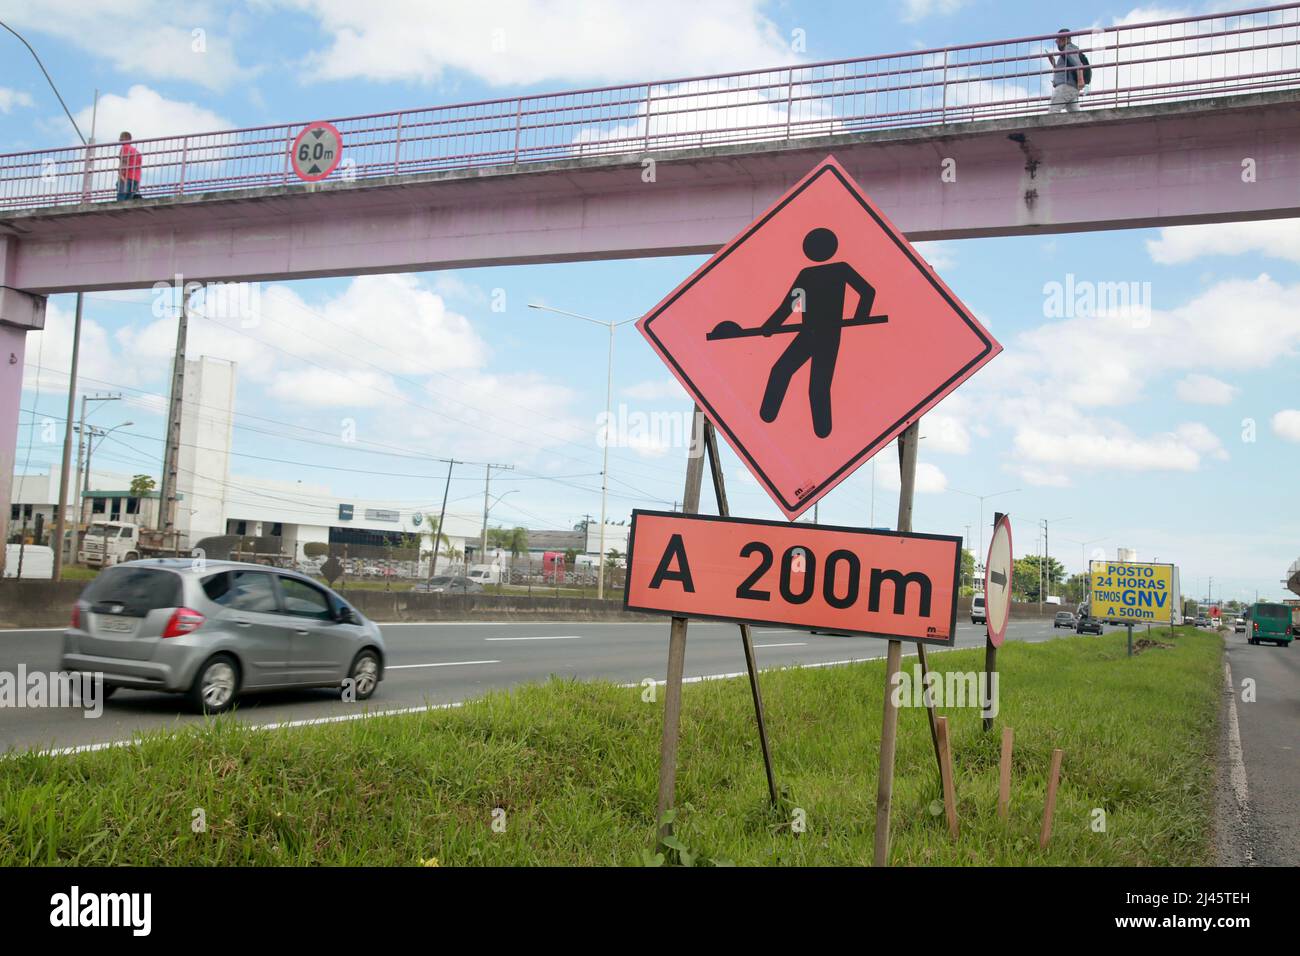 salvador, bahia, brazil - april 11, 2022: traffic sign indicates construction site along highway BR 324 Stock Photo